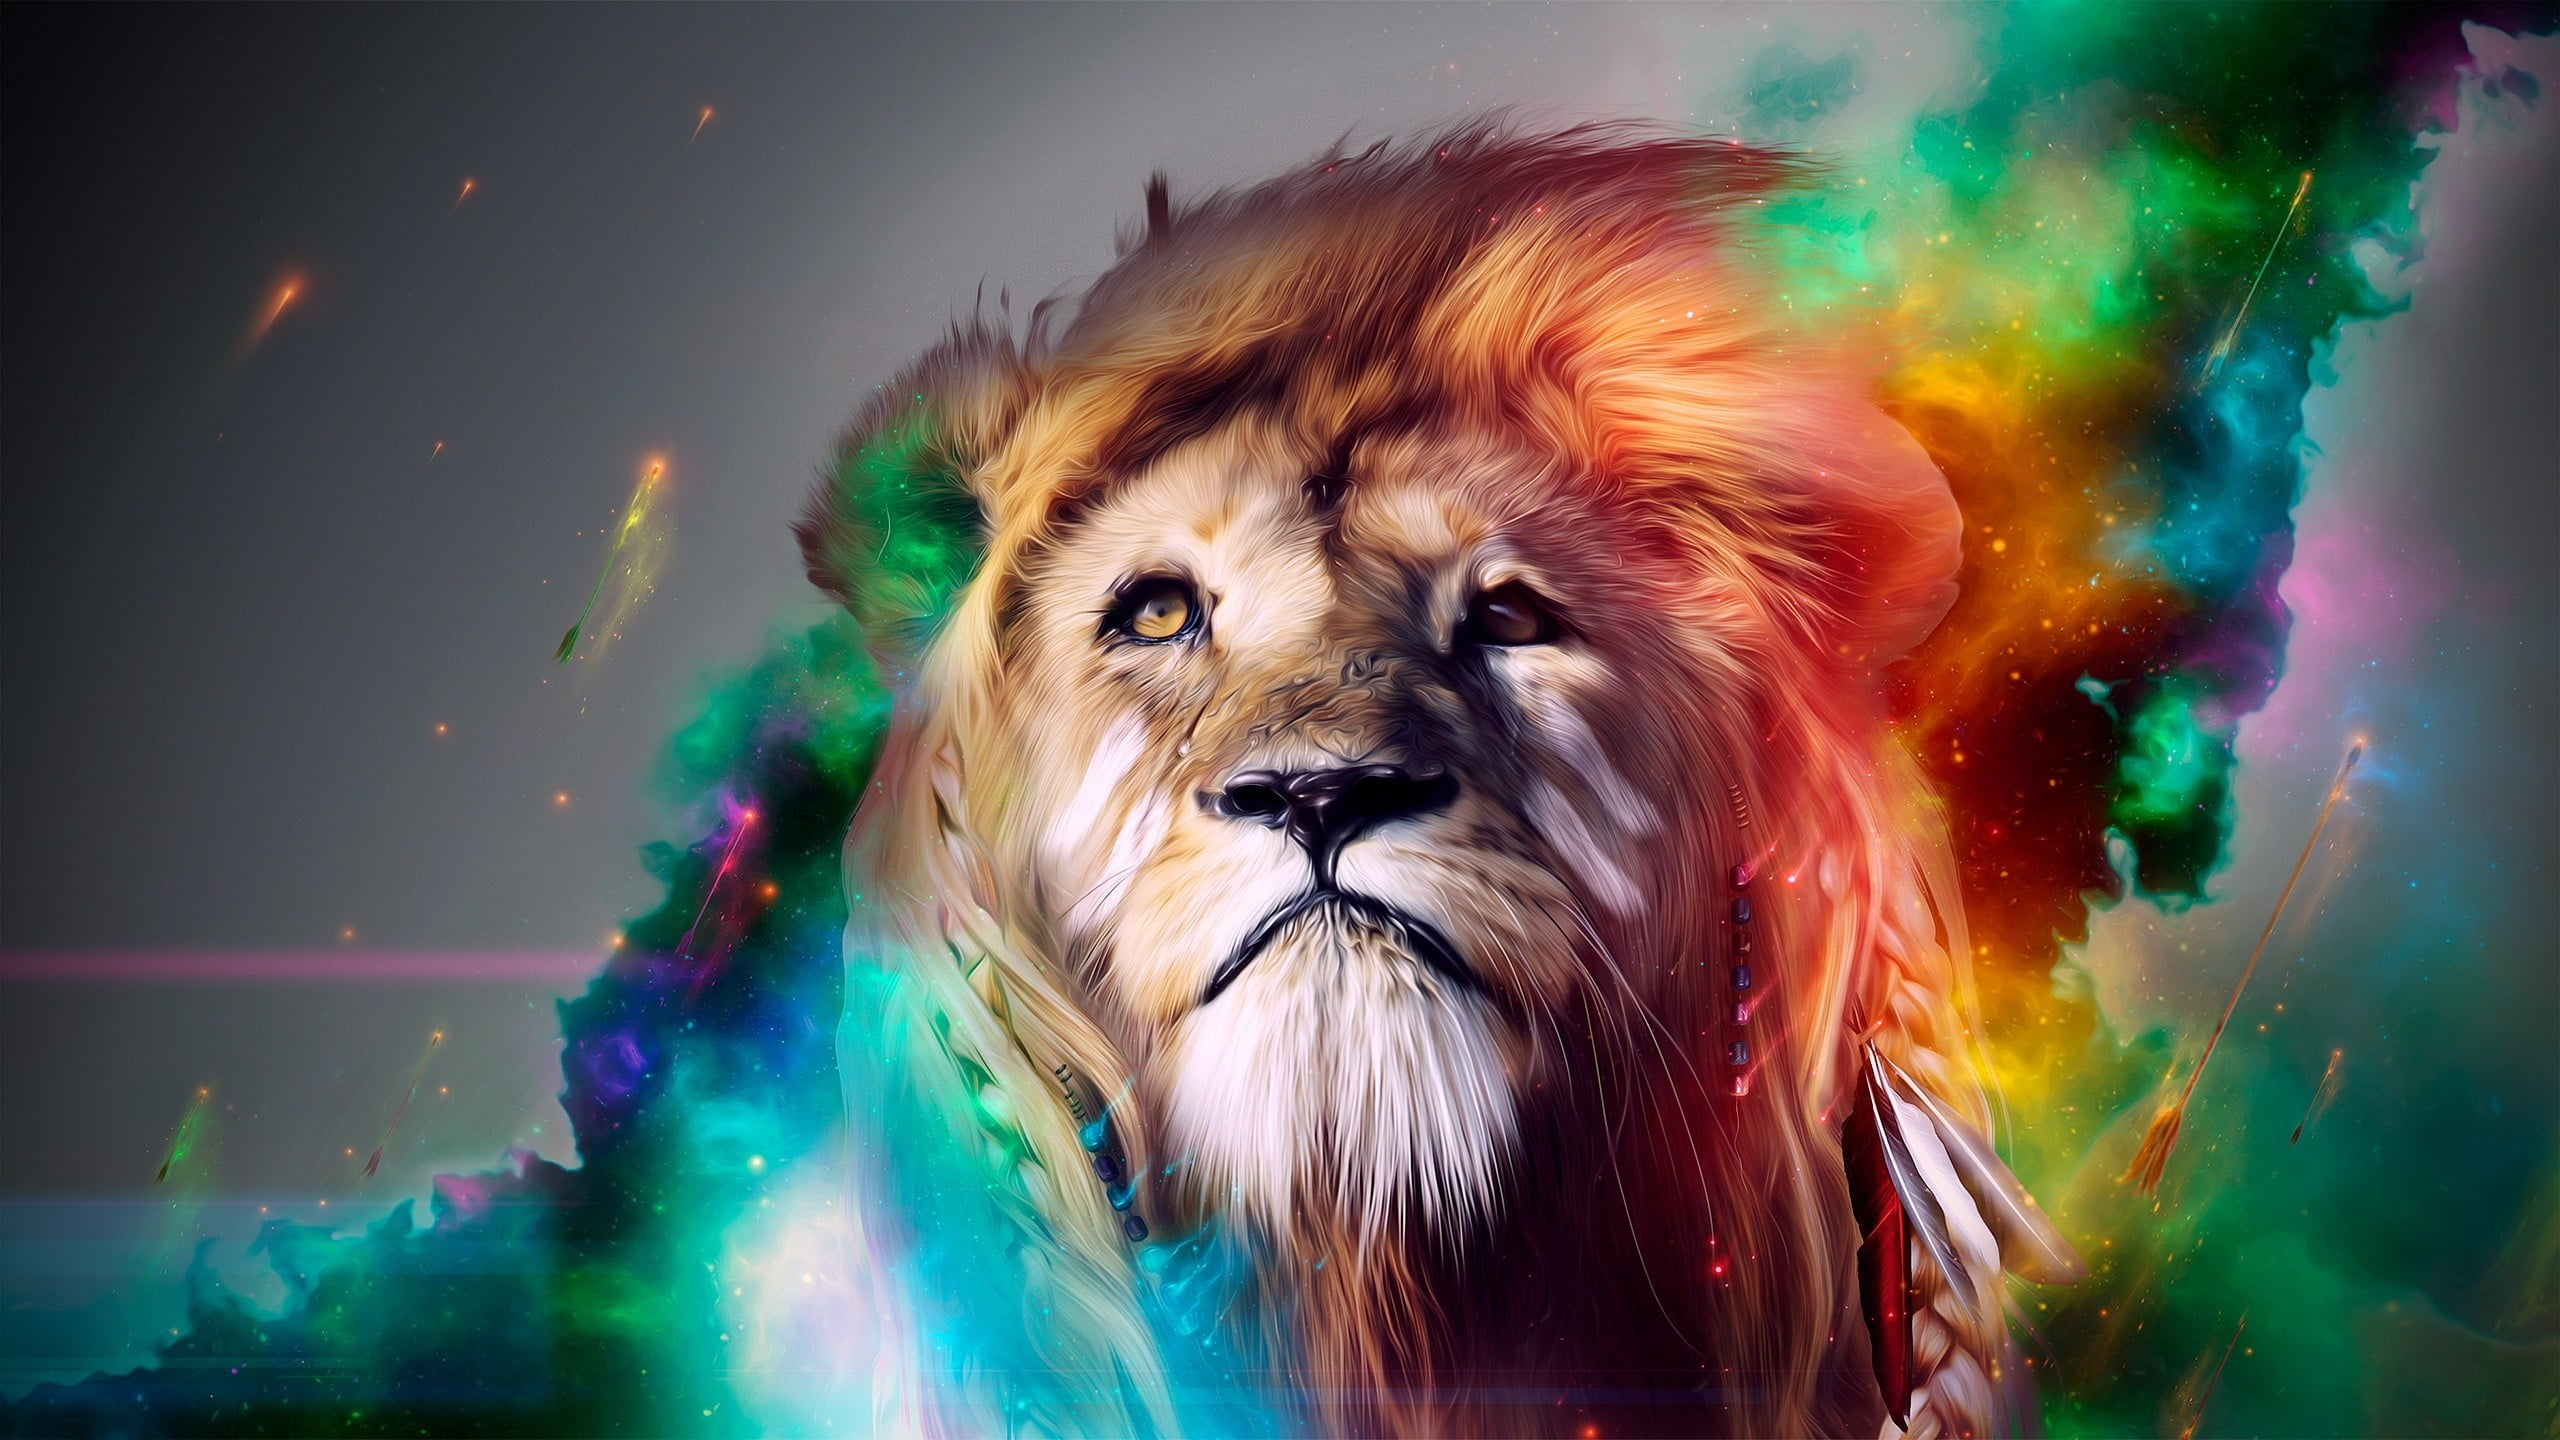 Lion illustraiton, abstract, artwork, colorful, digital art, motion wallpaper